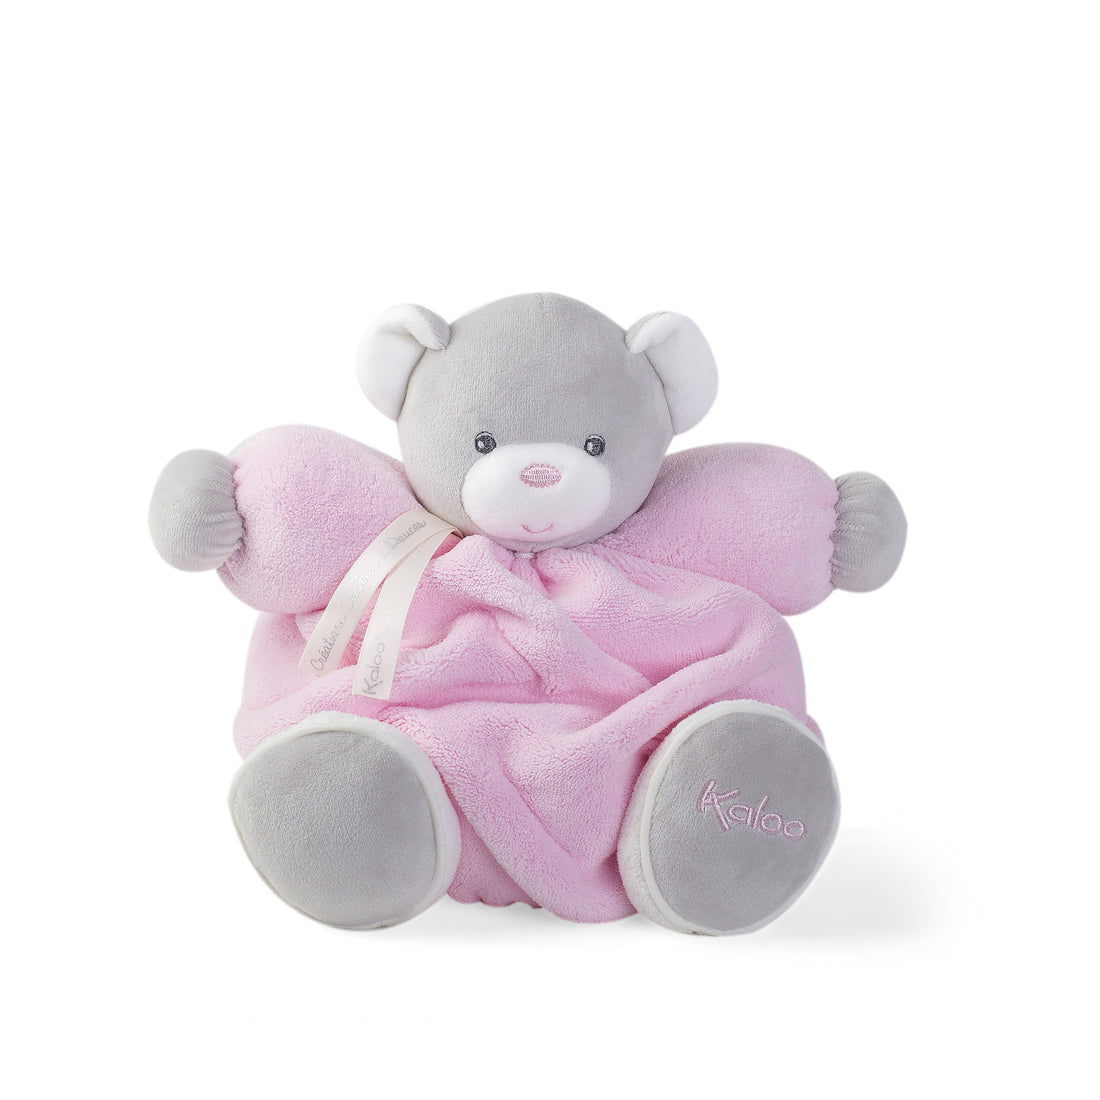 kaloo-plume-medium-pink-chubby-bear- (1)